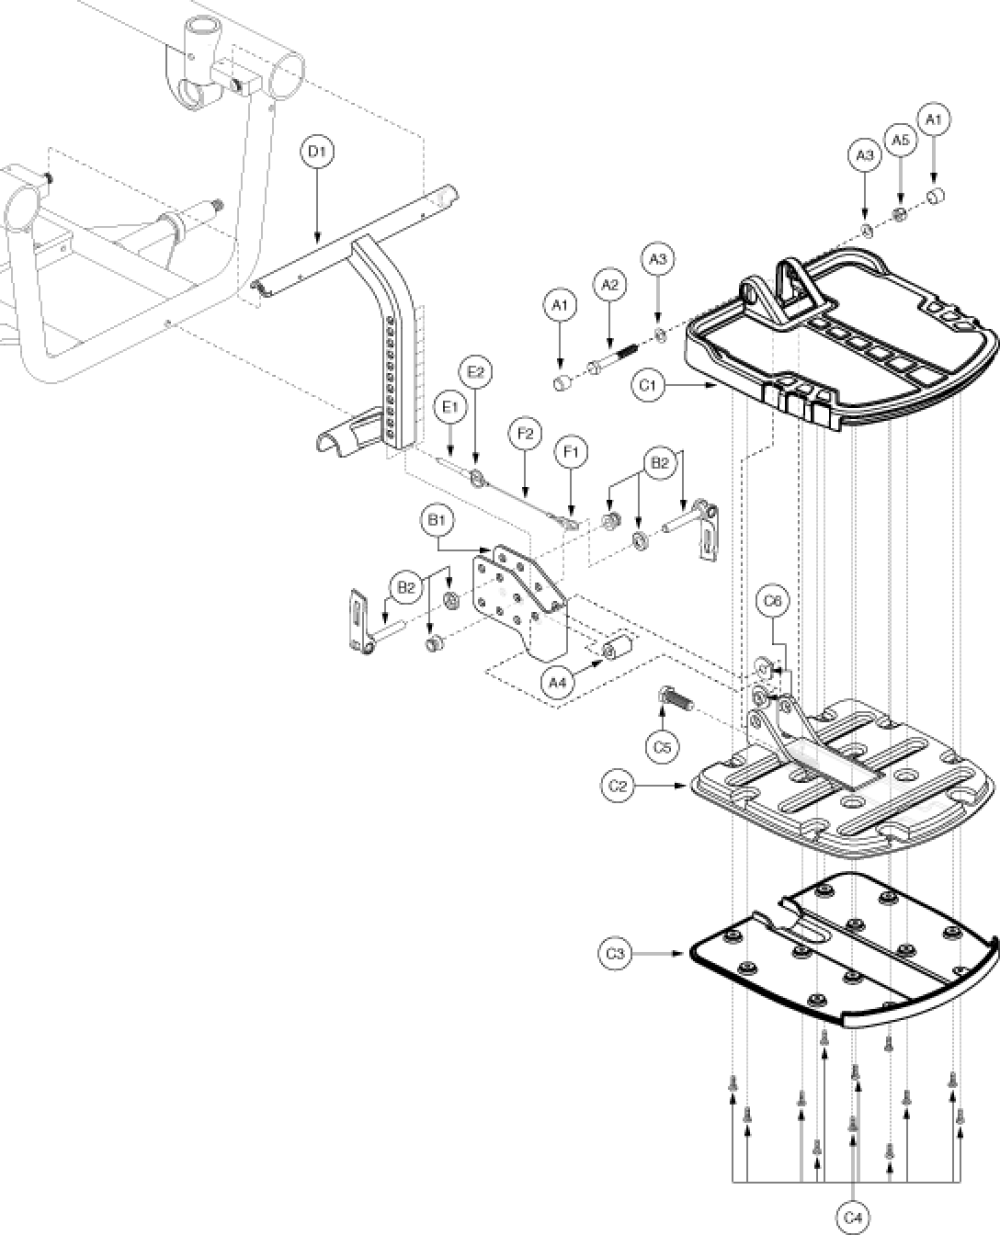 Footrest Assembly - Atx parts diagram